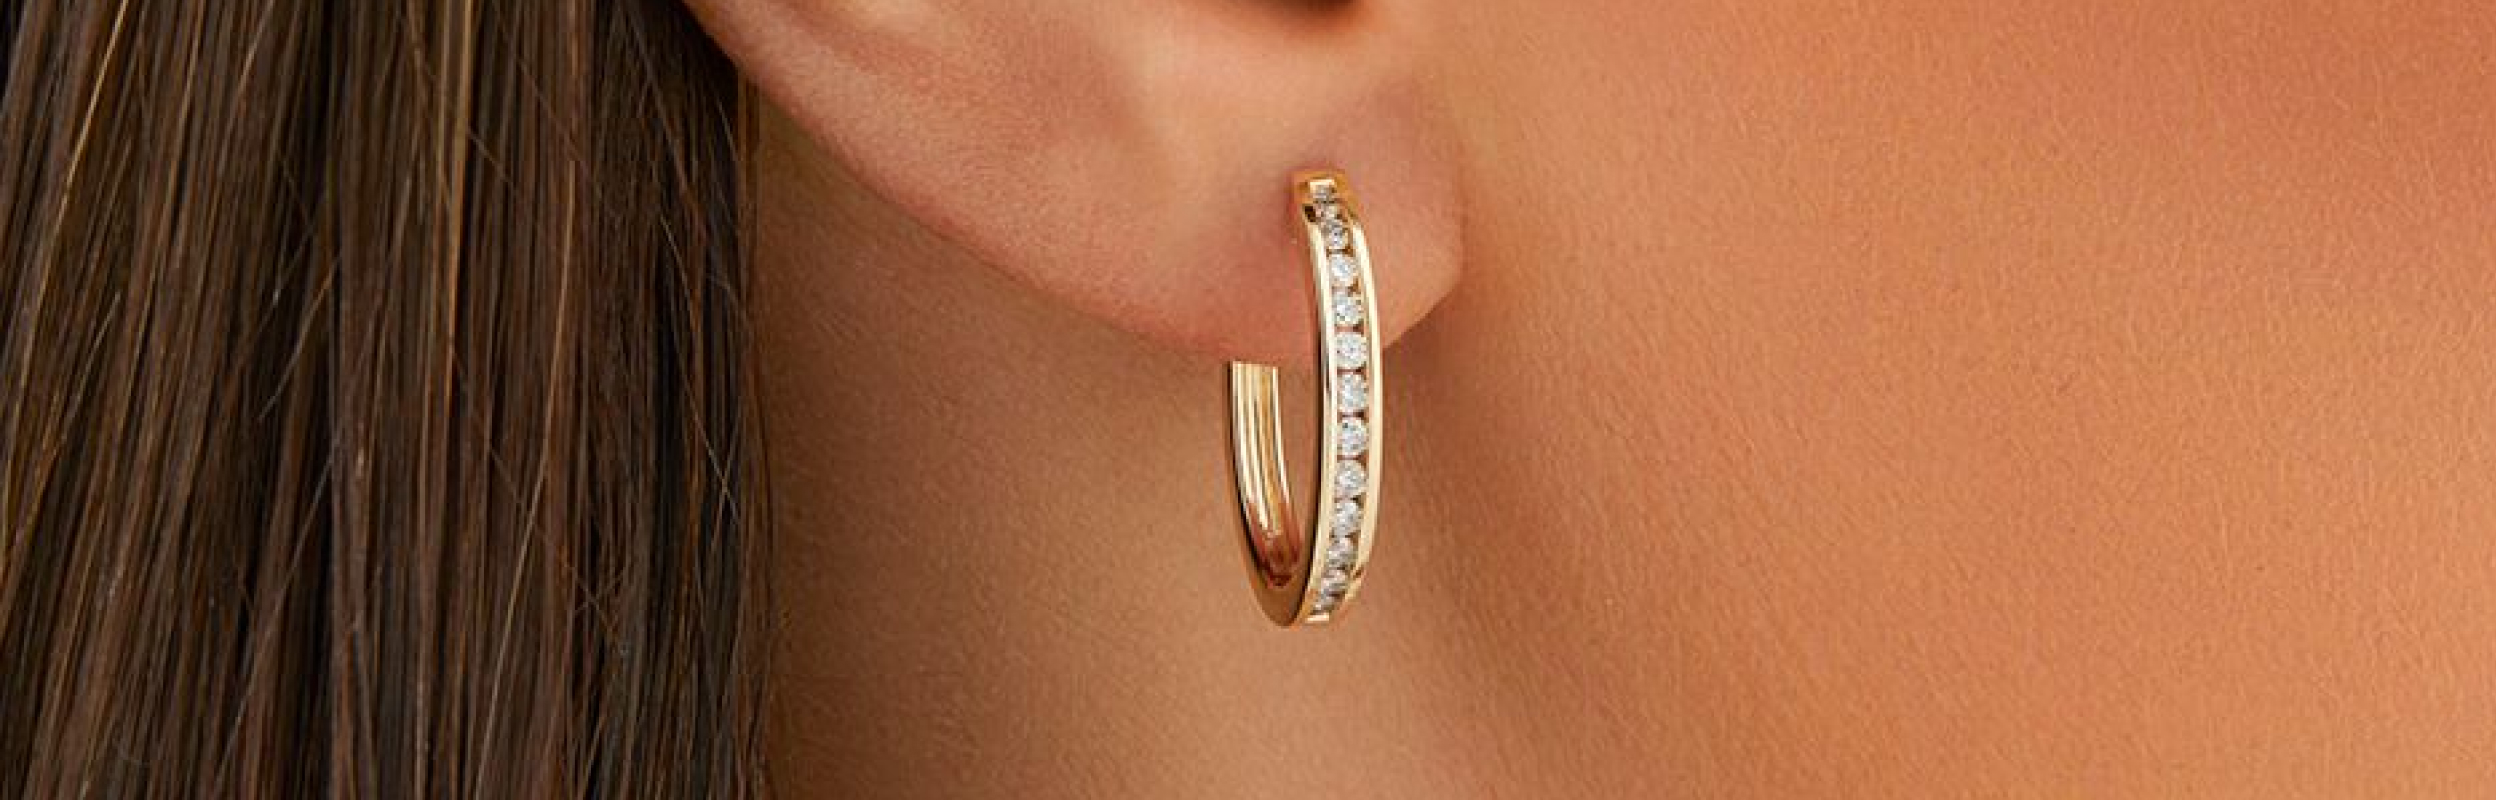 gold huggie hoop earrings with diamonds in ear